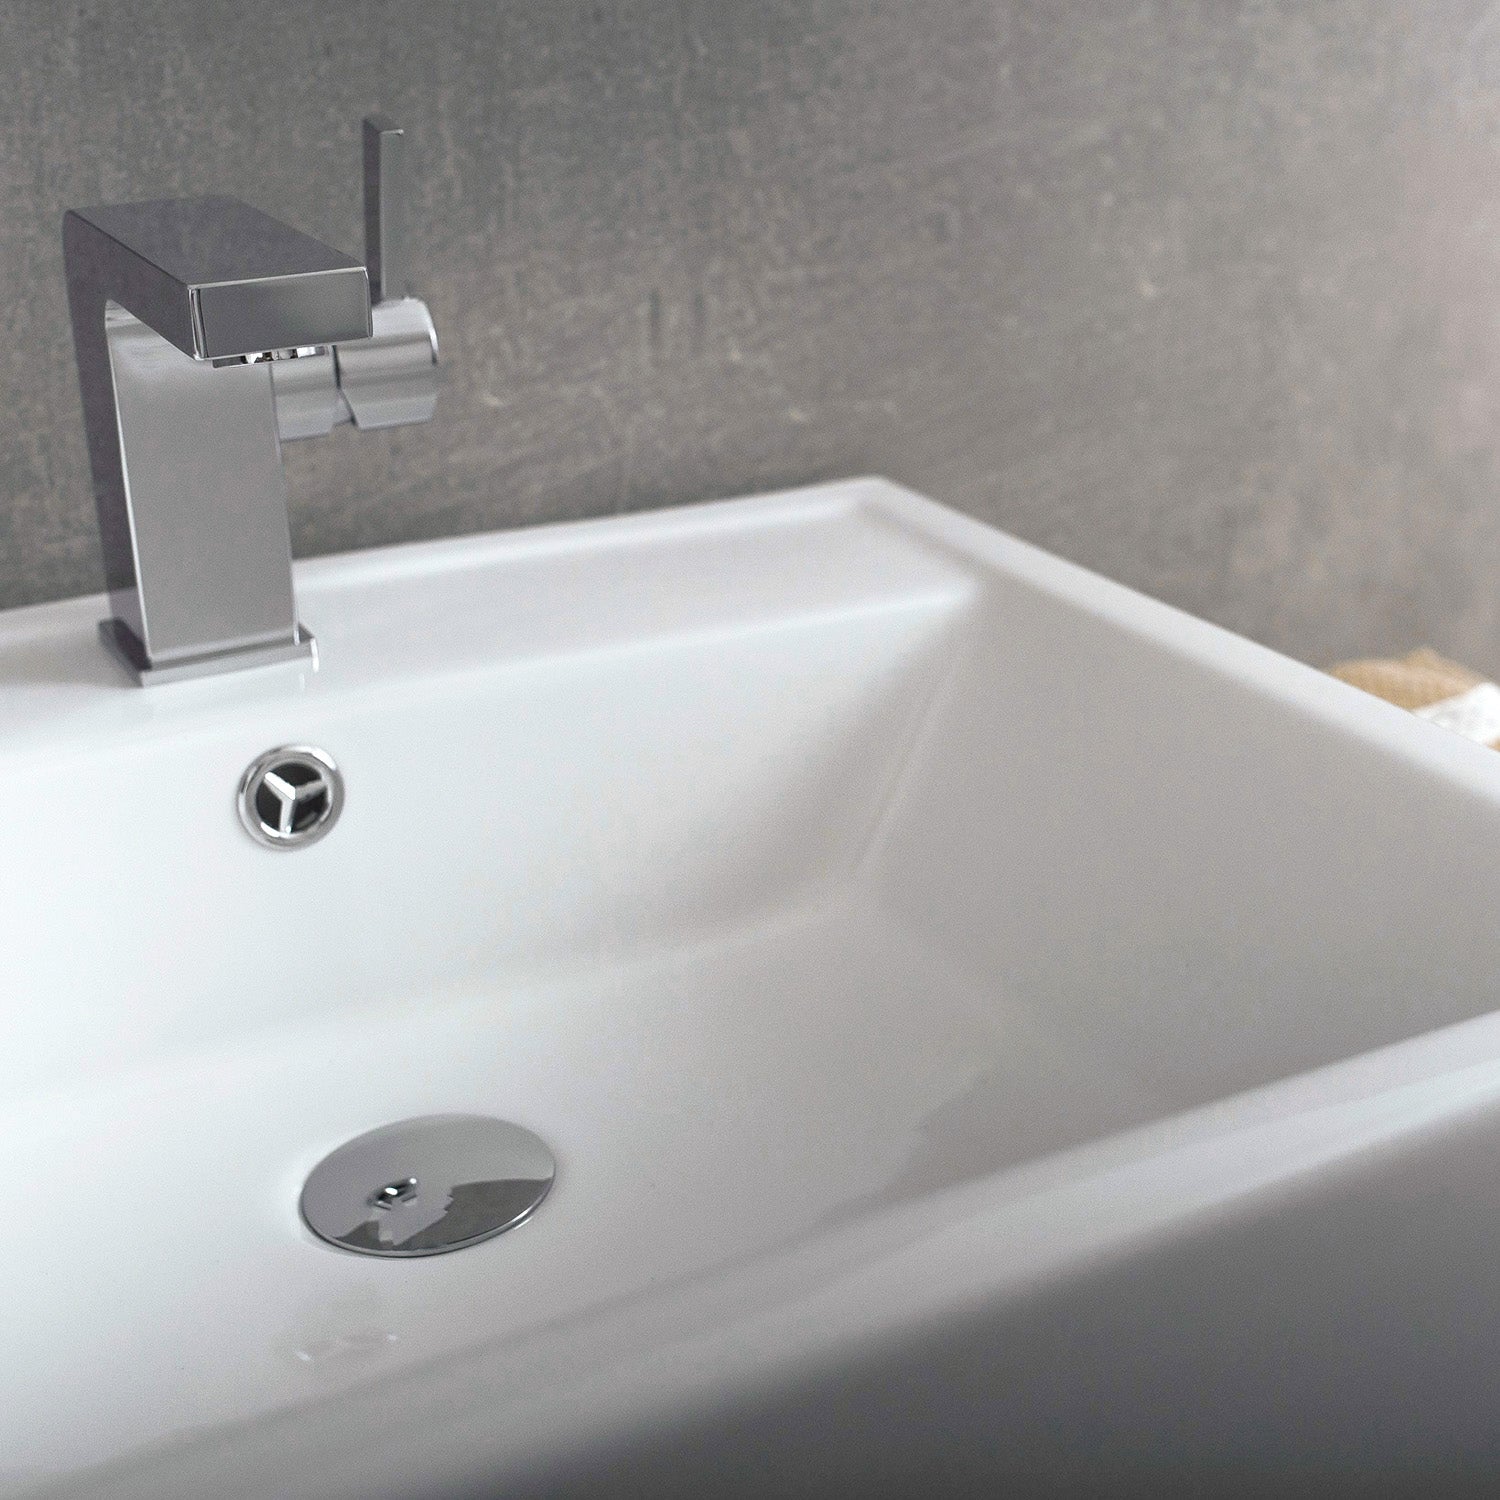 DAX Ceramic Rectangle Single Bowl Bathroom Vessel Sink, White Finish, 20-1/8 x 17-1/4 x 6 Inches (BSN-241)